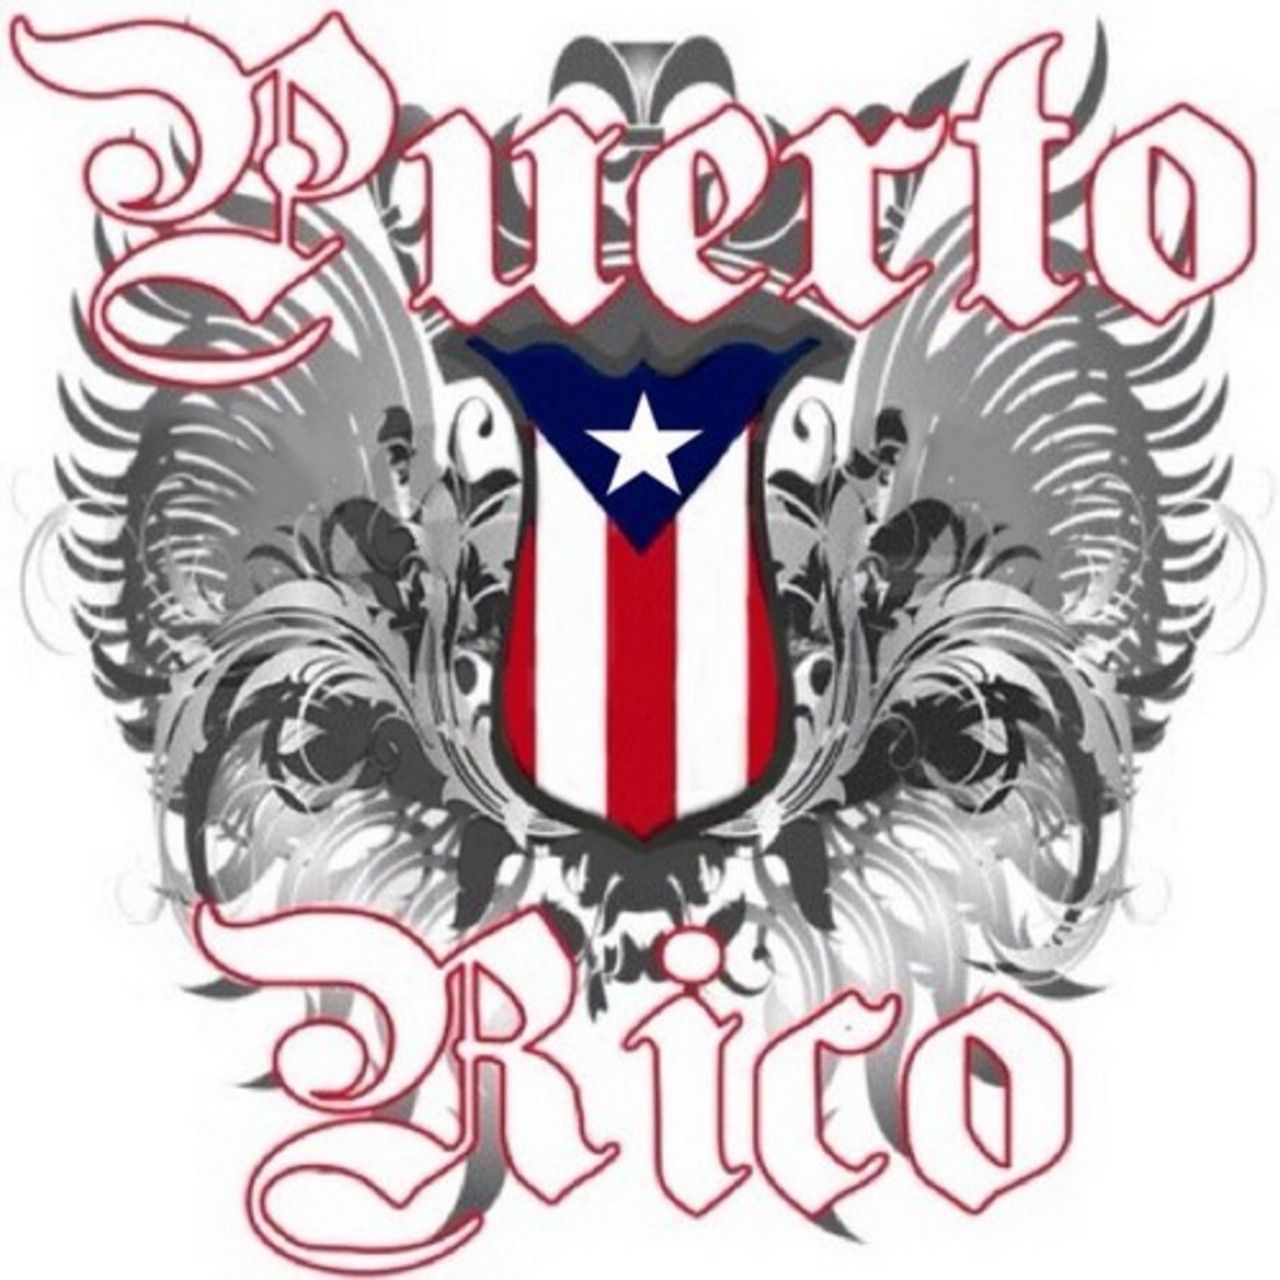 Puerto Rico Wallpaper